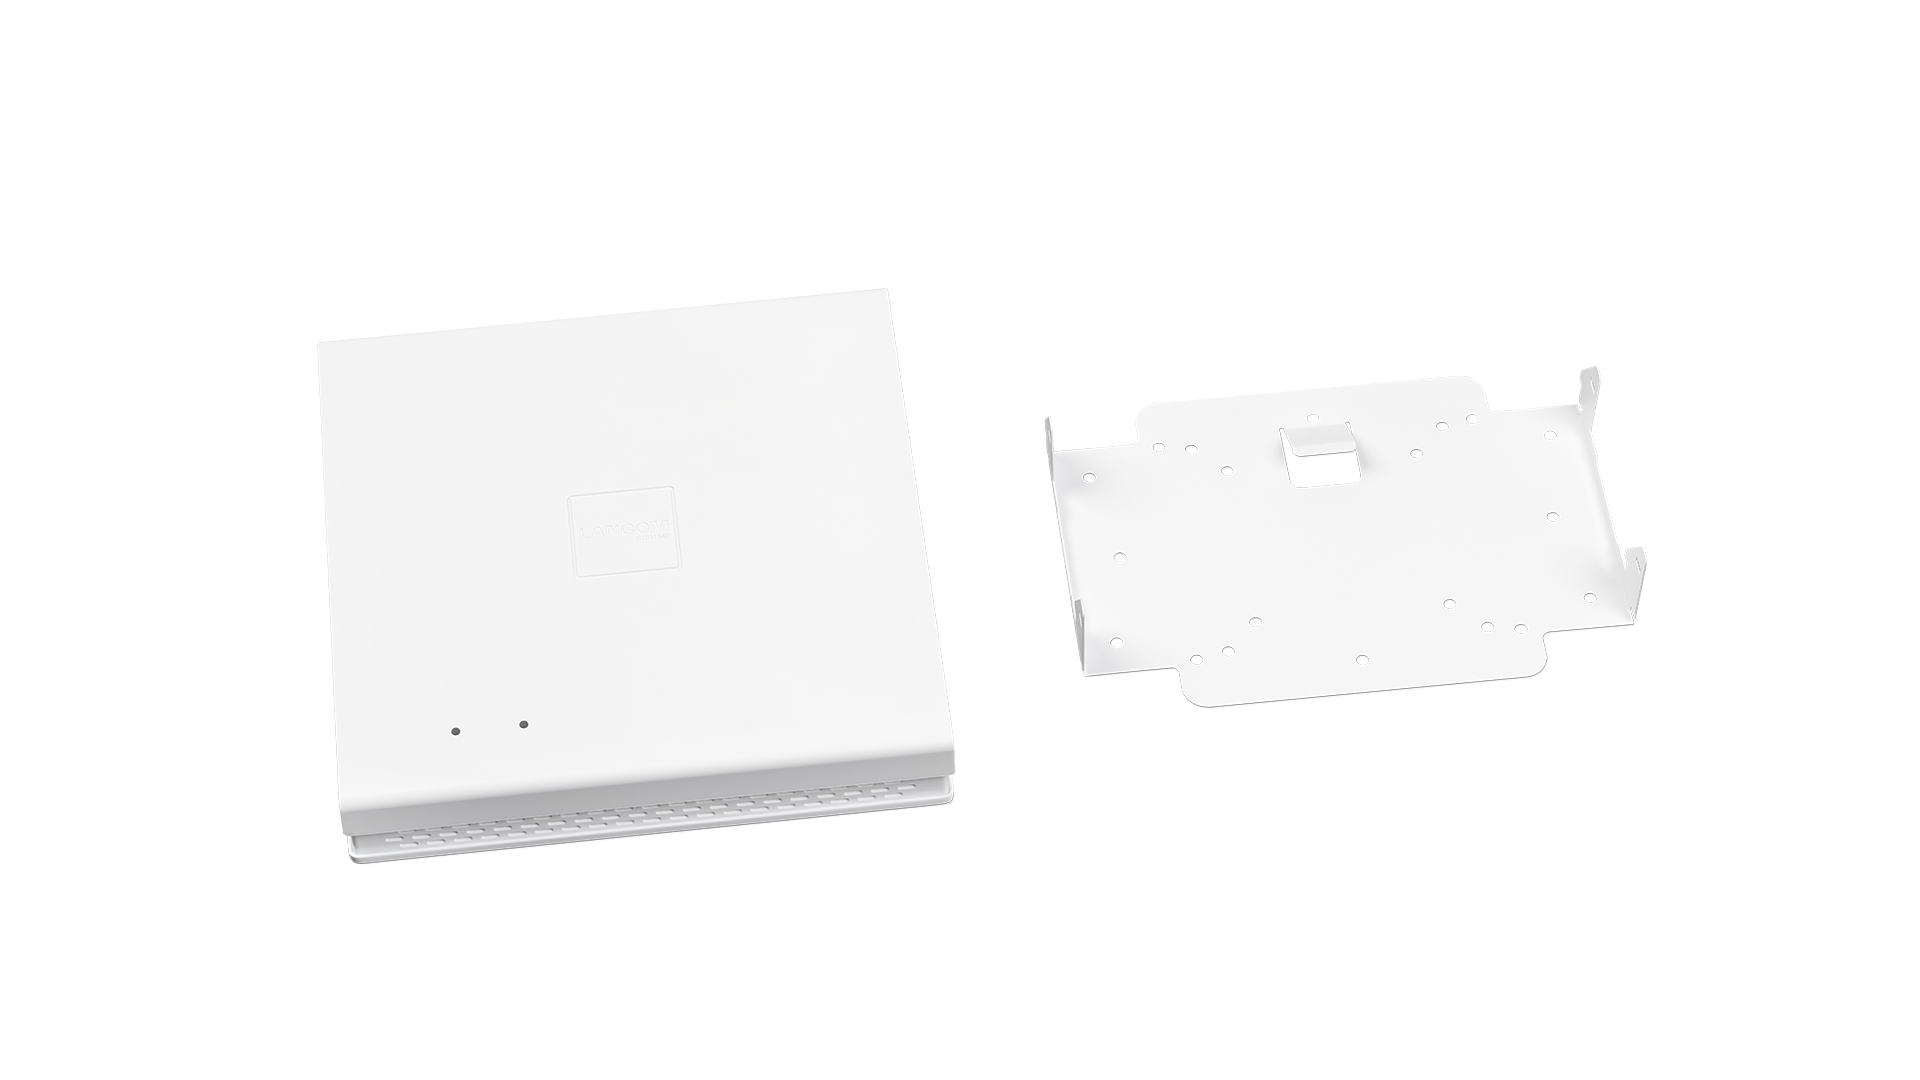 Produktfoto des LANCOM LX-6500E und des Wall Mounts